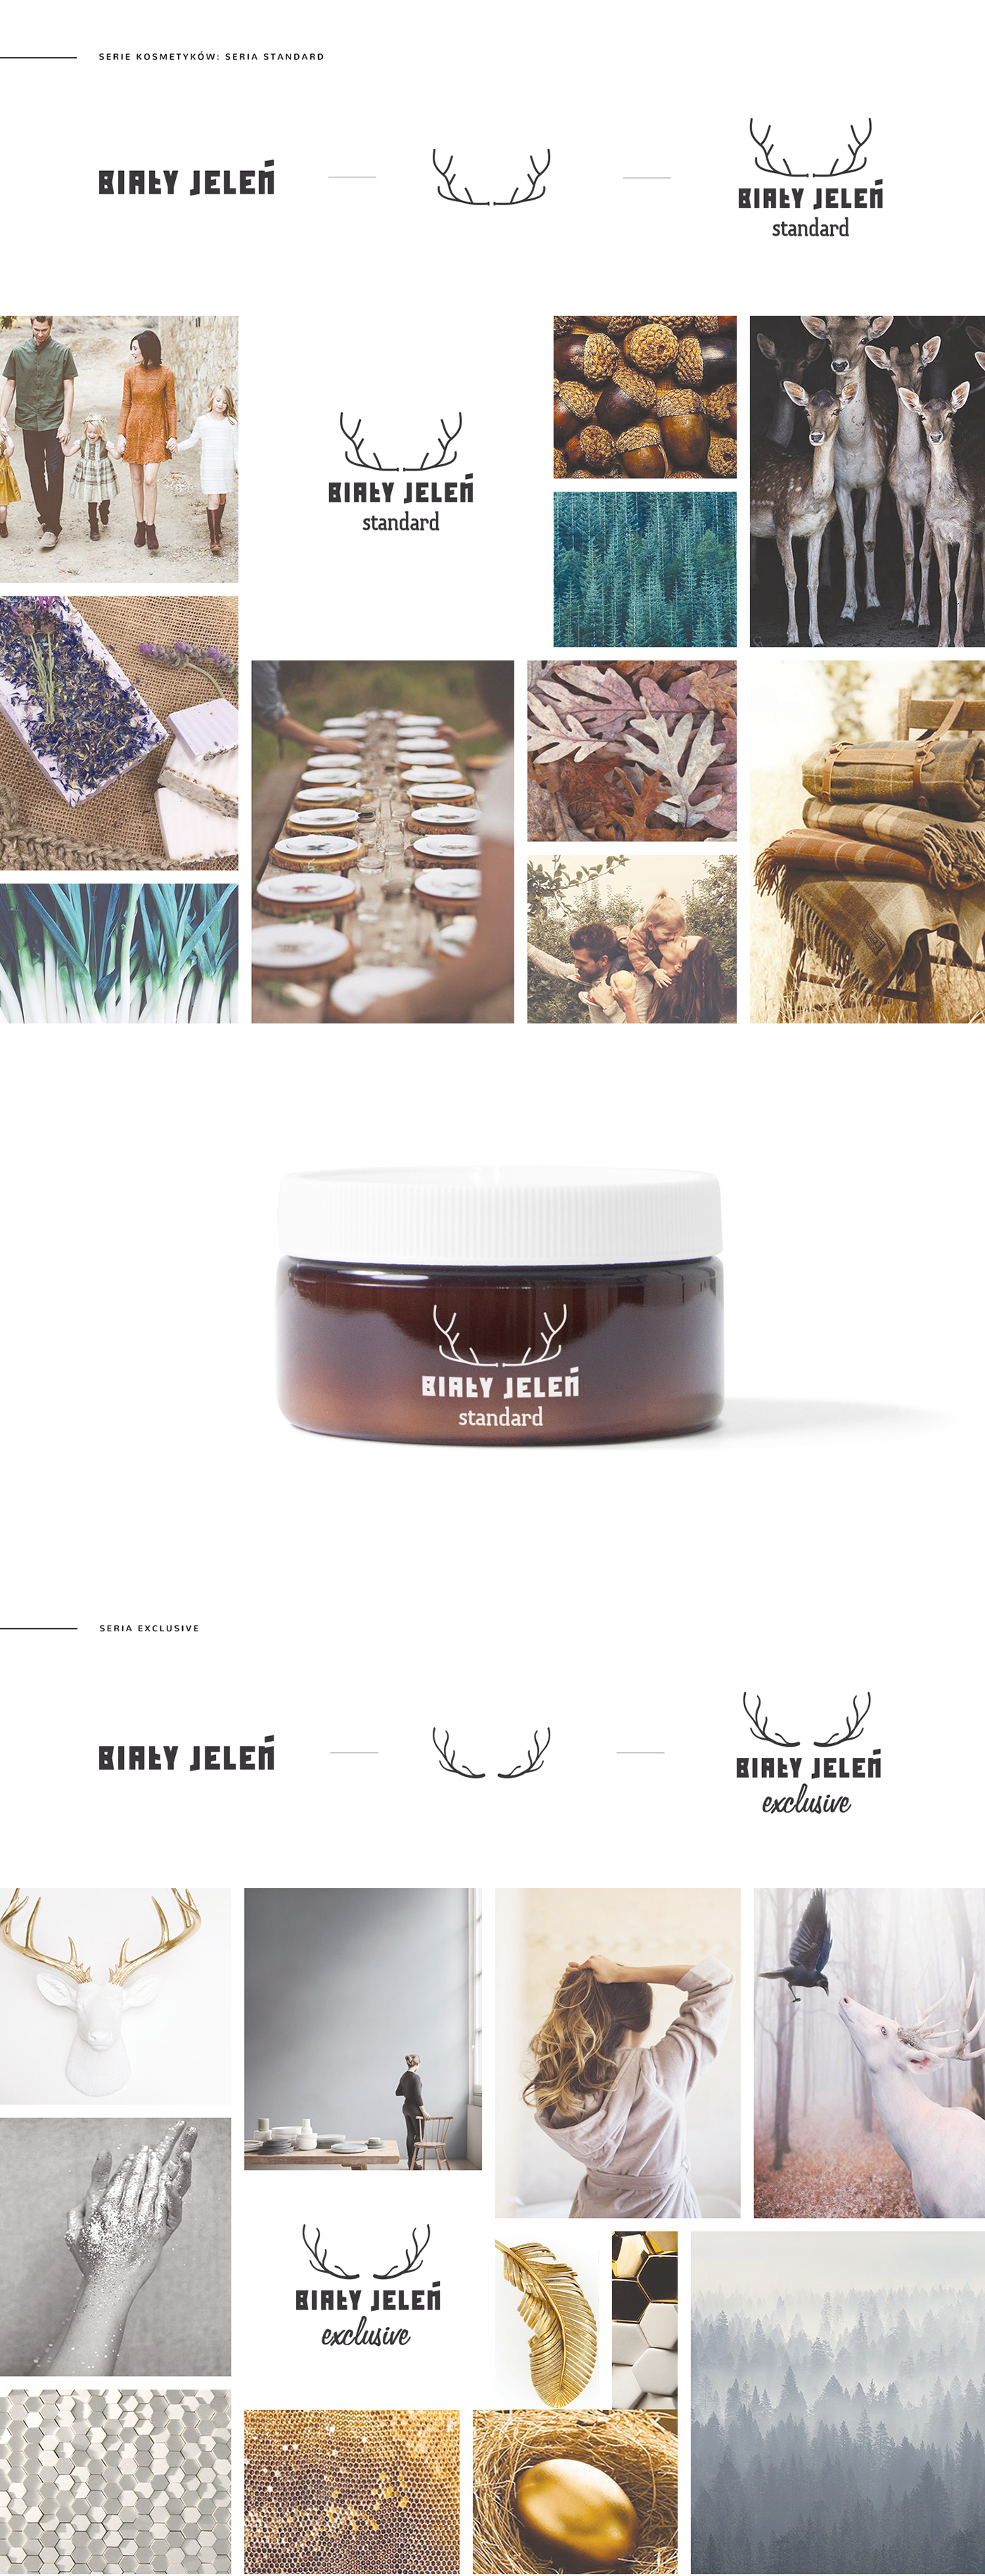 biały jeleń Biały jelen branding  rebranding soap cosmetics hipoalergic clean safe